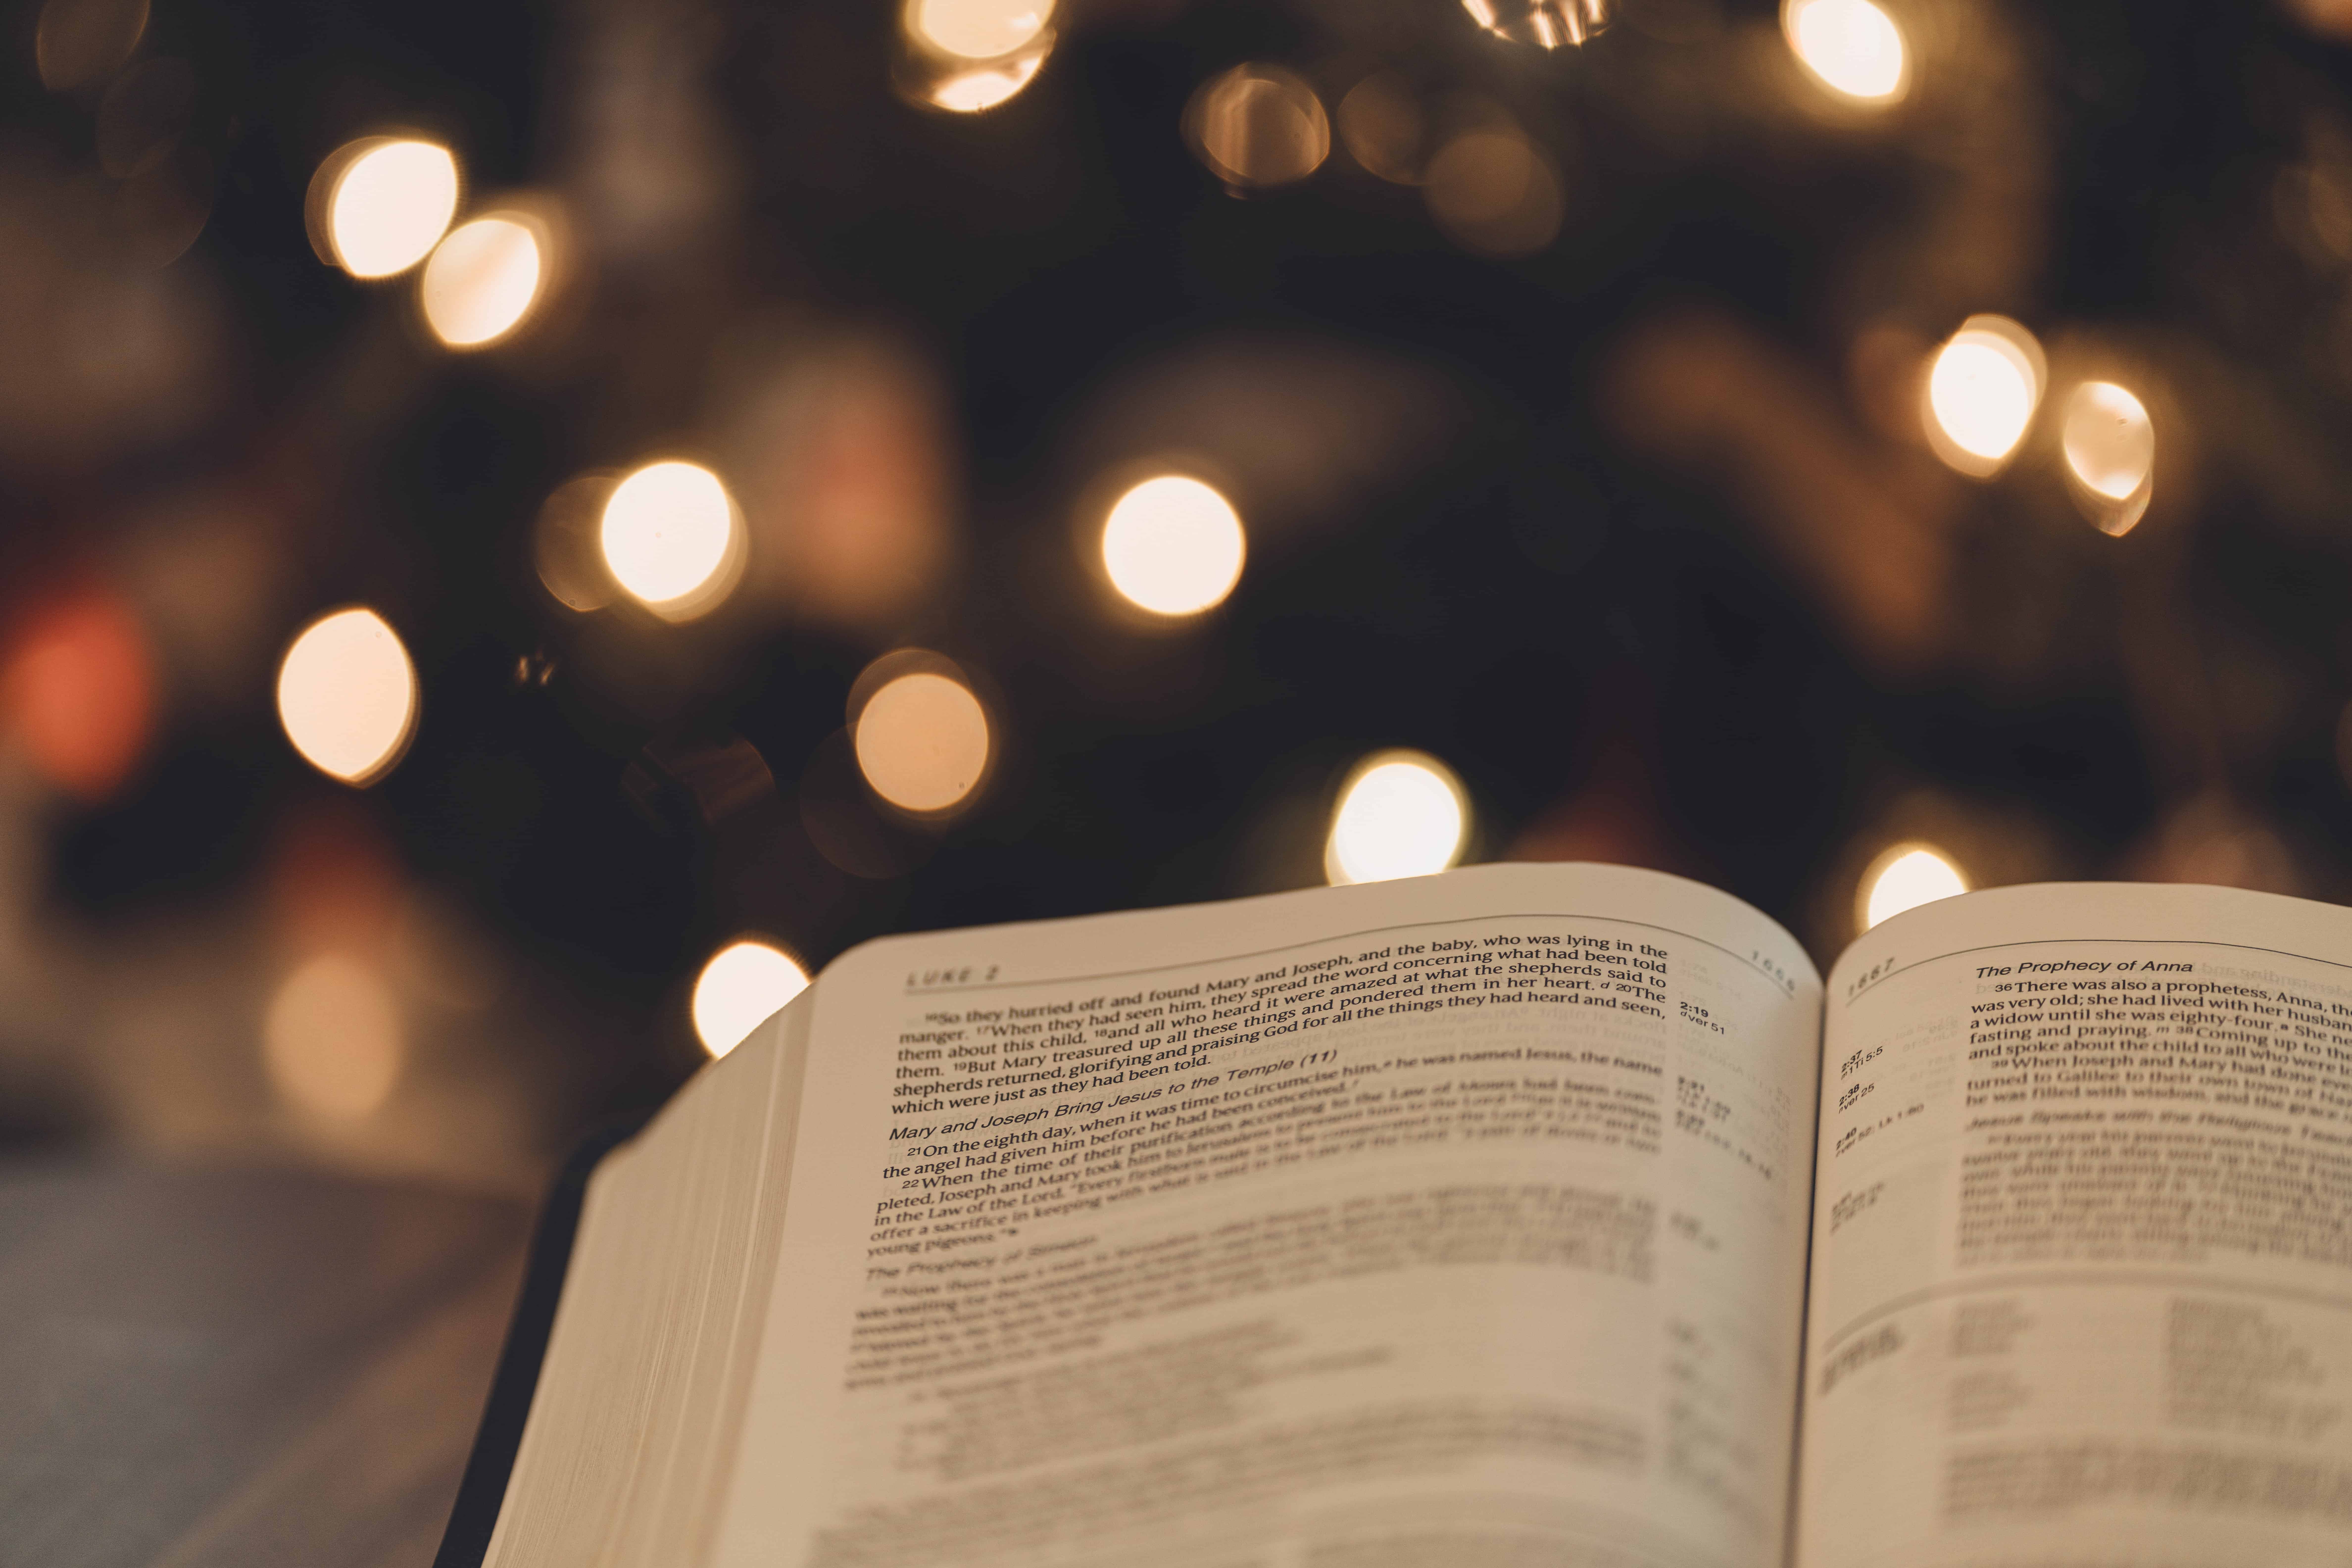 Luke 2 in Bible, Christmas tree, Christmas lights